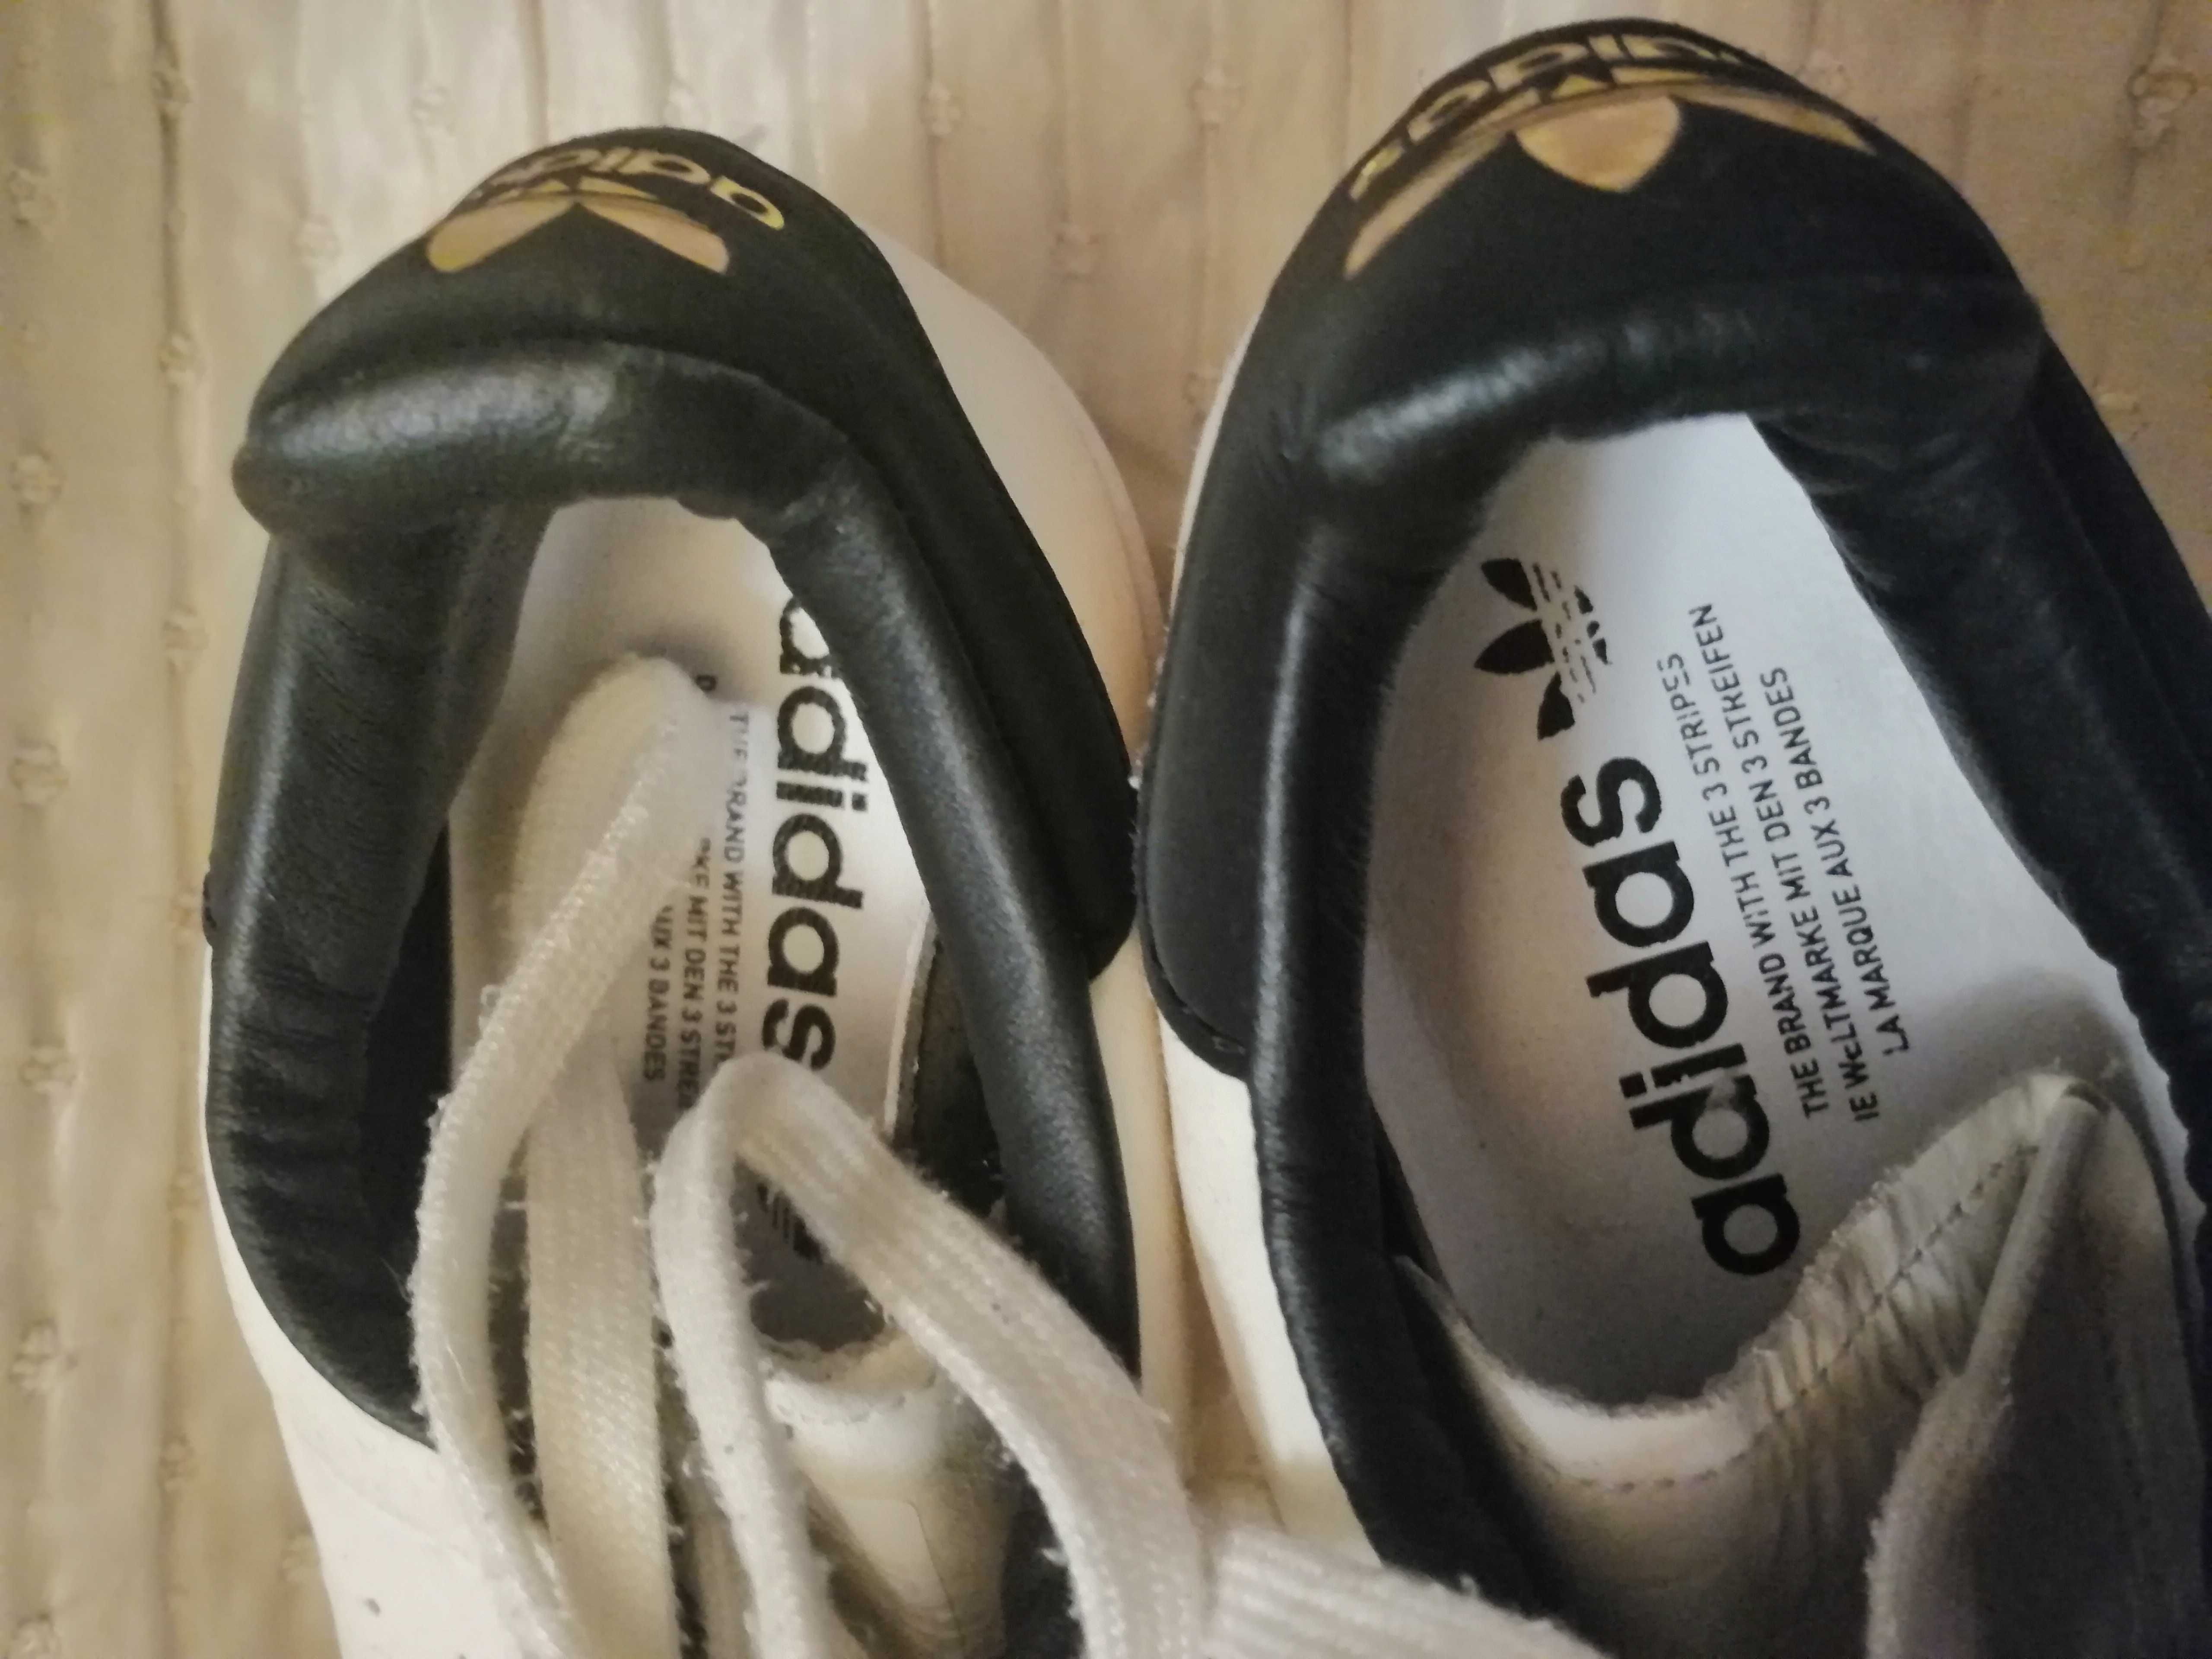 Adidas Superstar Los Angeles buty damskie r. 40 wkładka 25, 5 cm